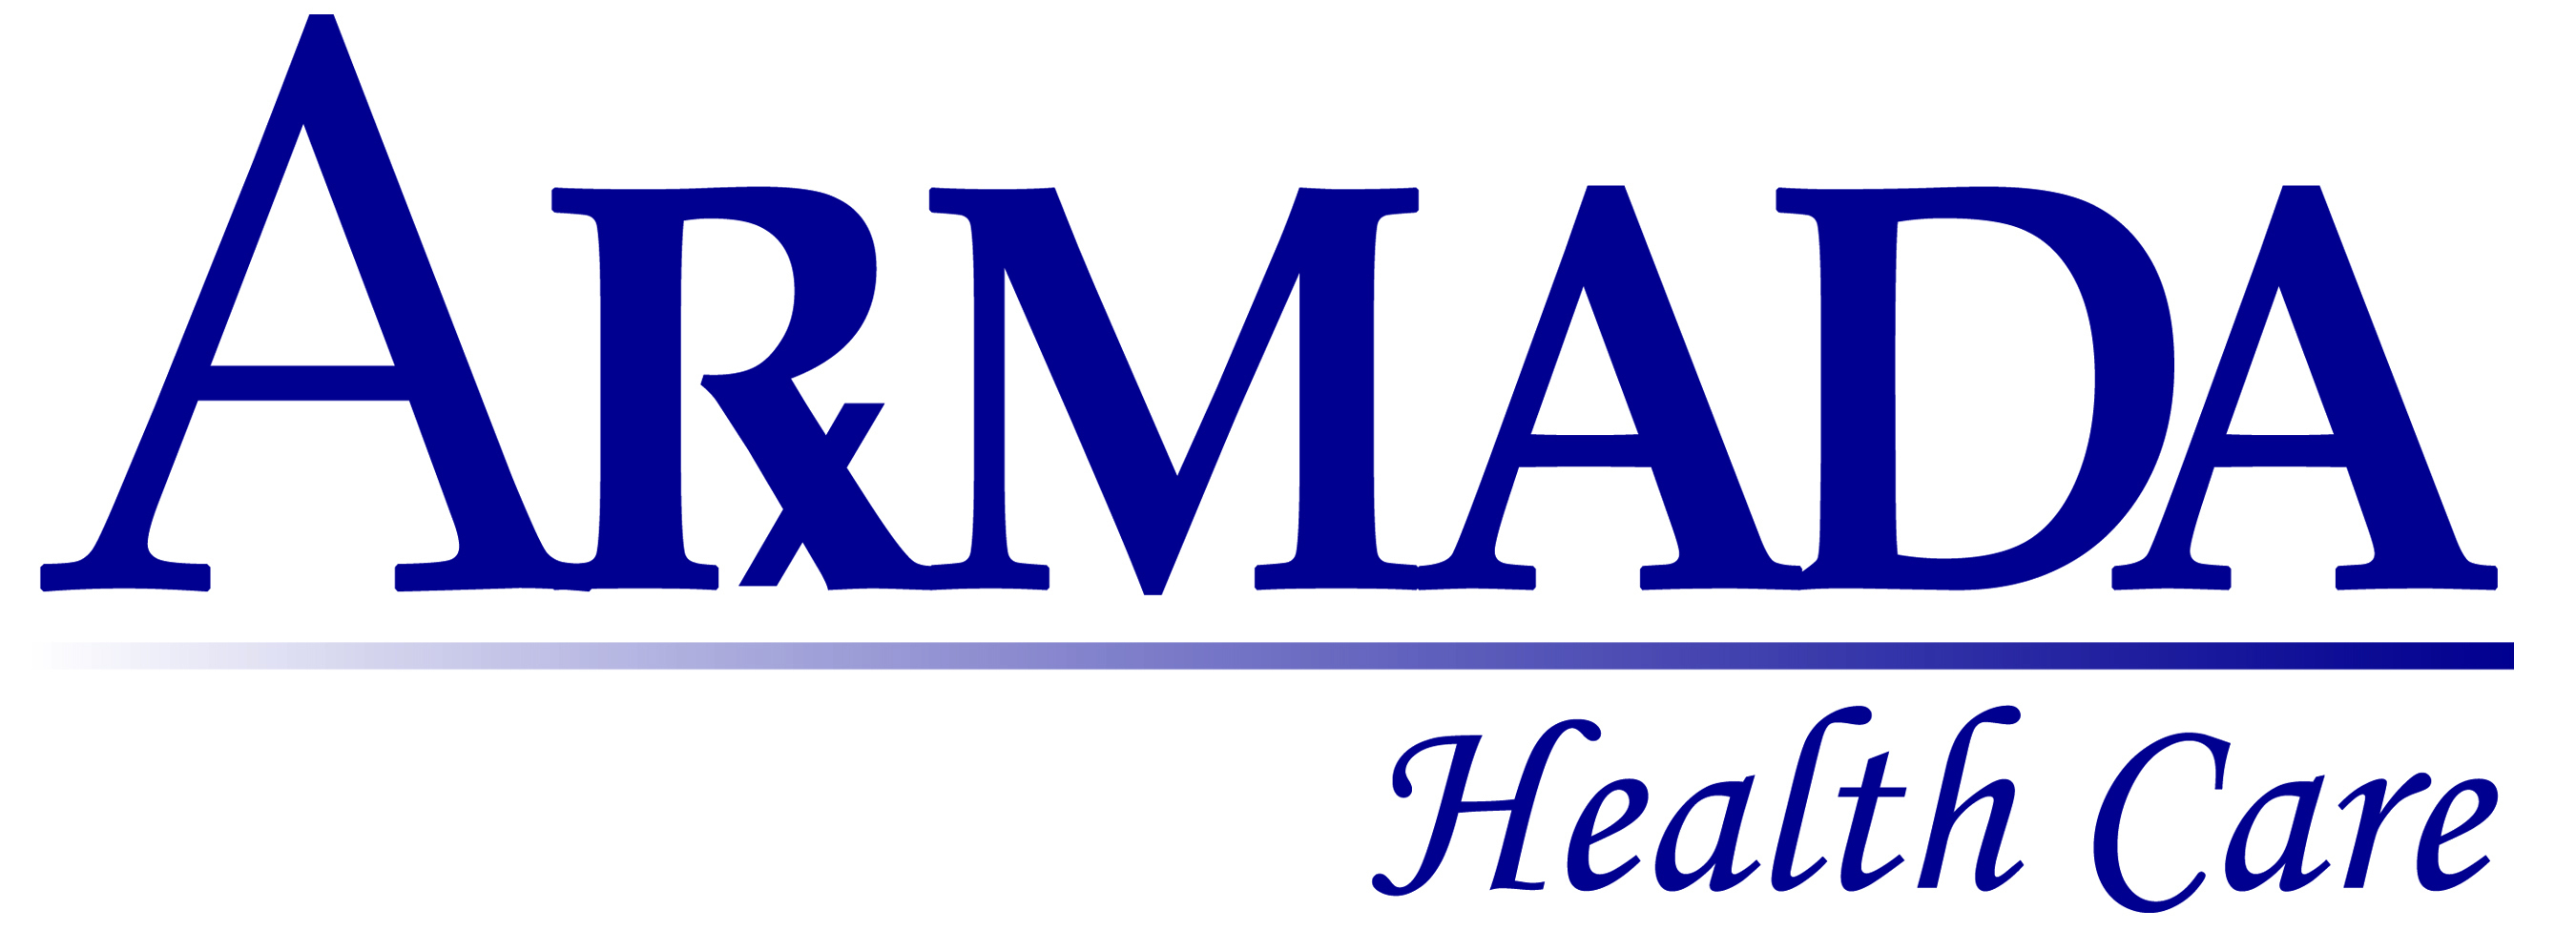 Armada Health Care (PRNewsFoto/Armada Health Care)